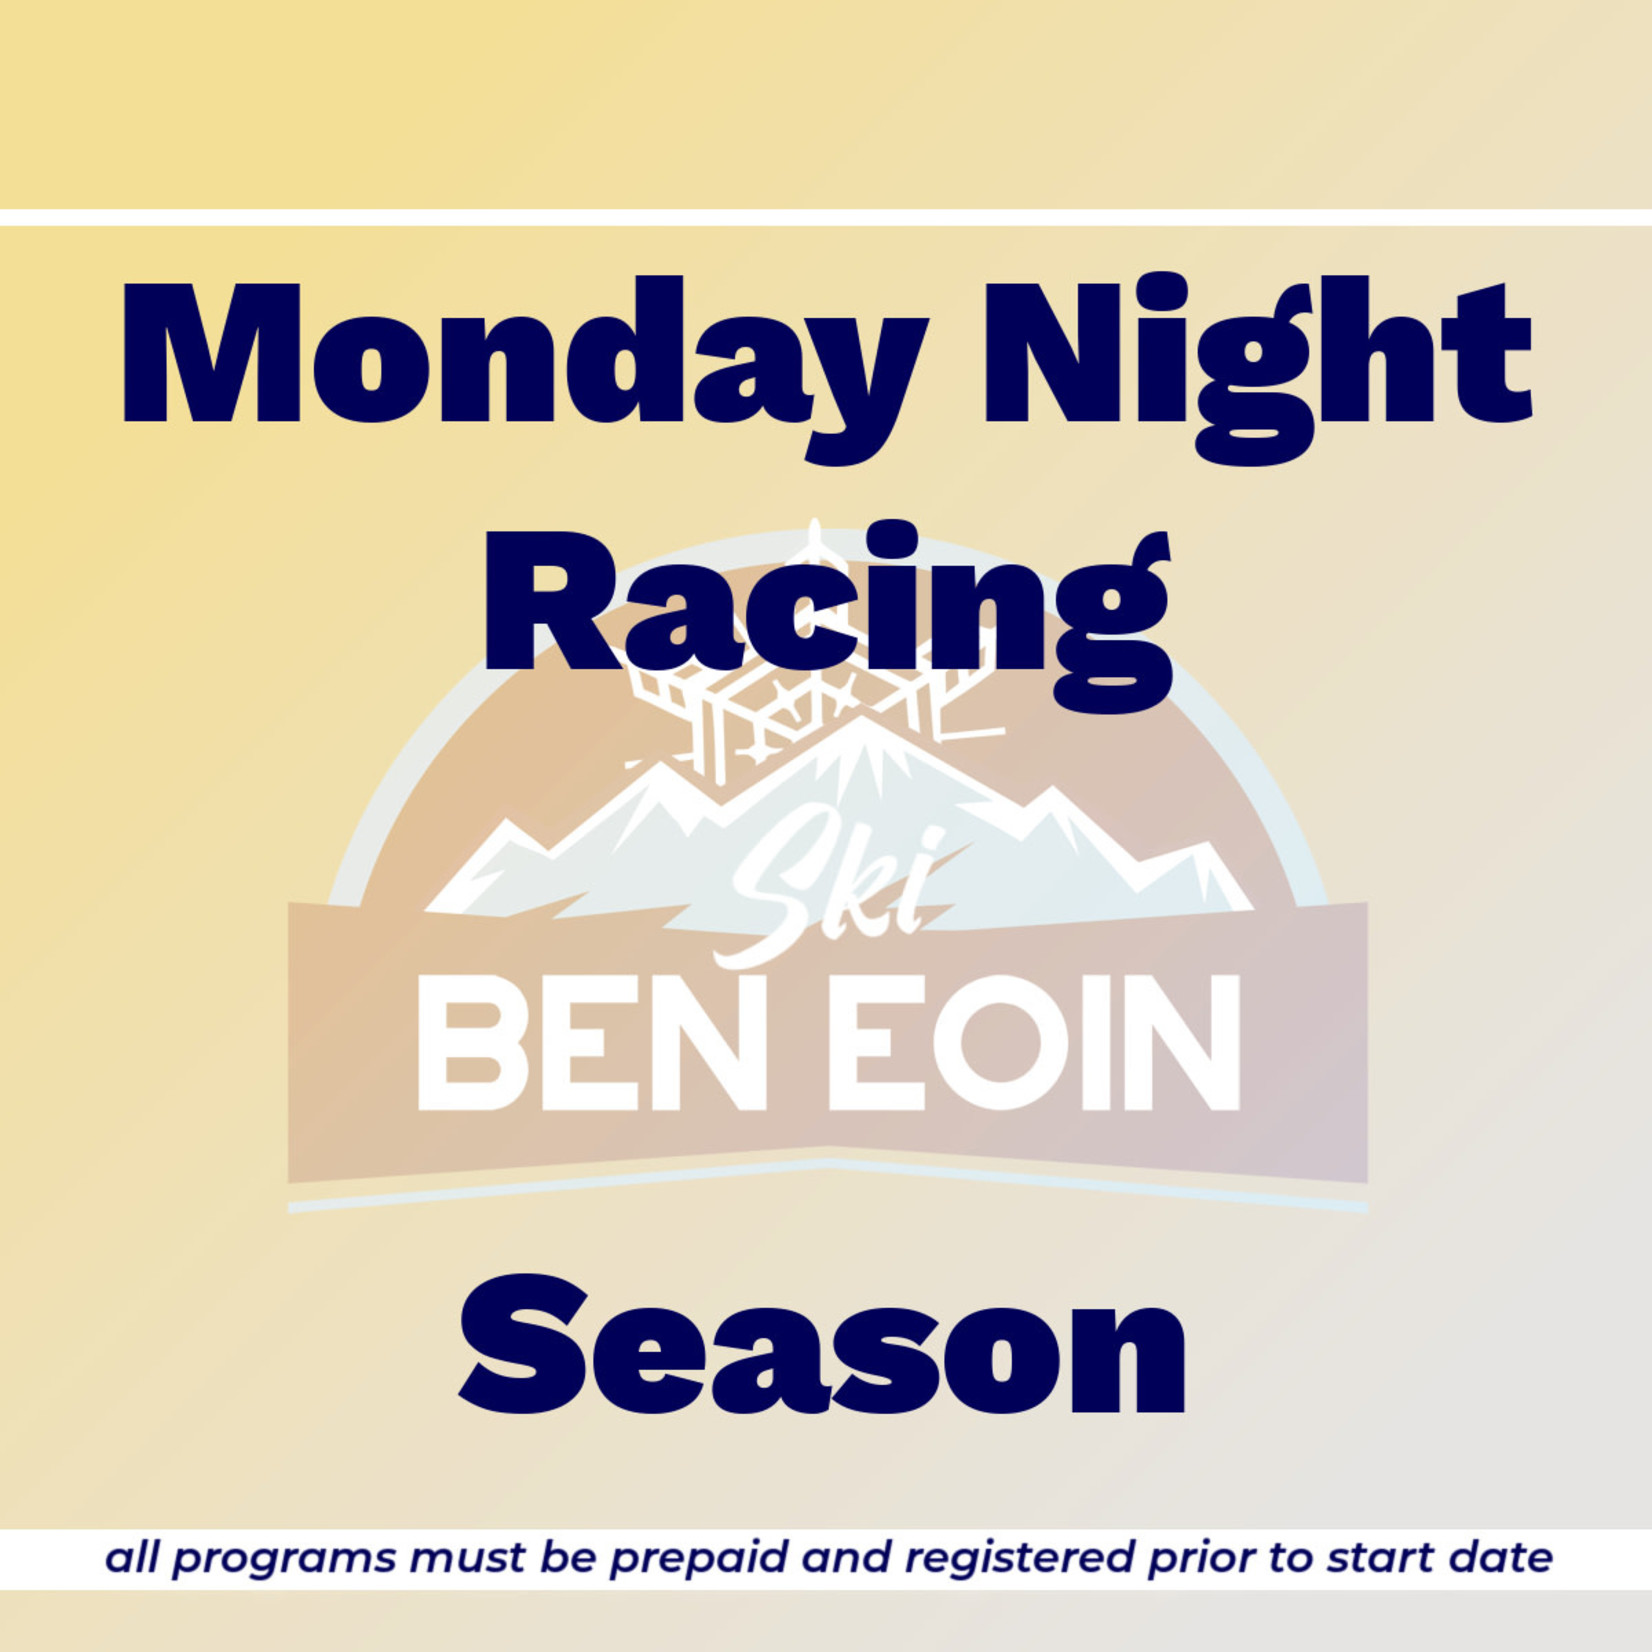 Monday Night Adult Recreational Racing Season